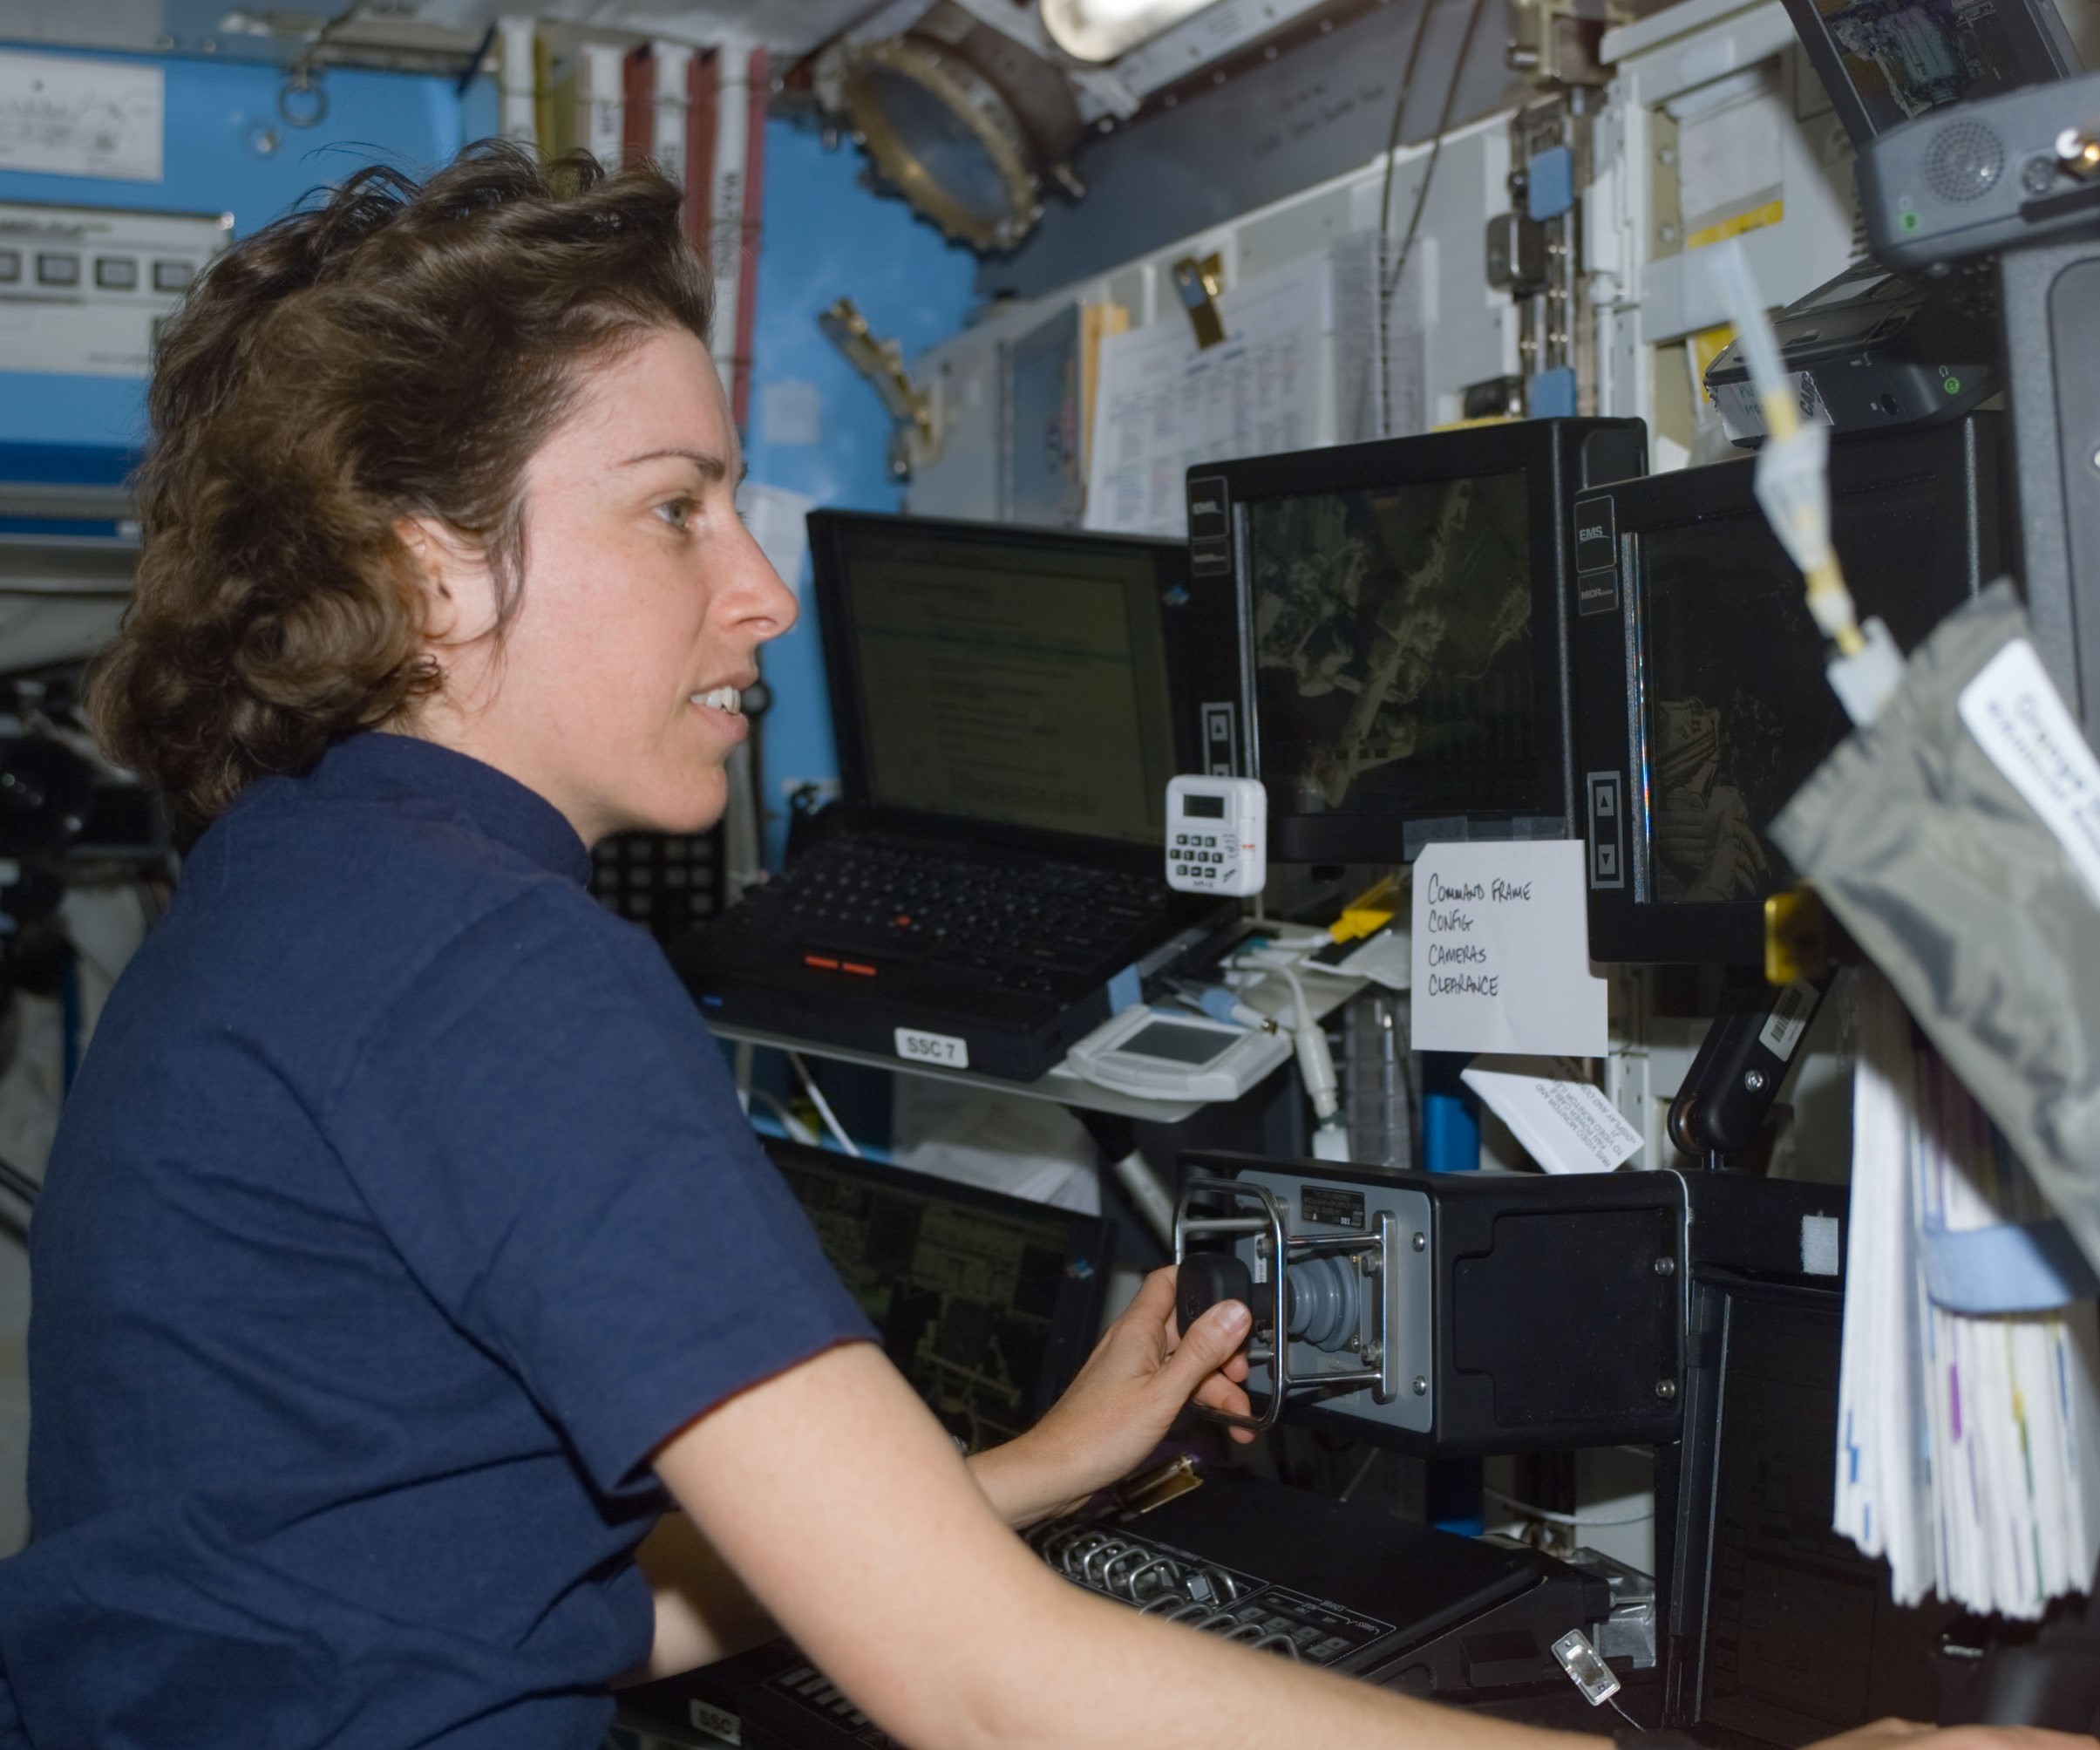  NASA astronaut Ellen Ochoa operating Canadarm2